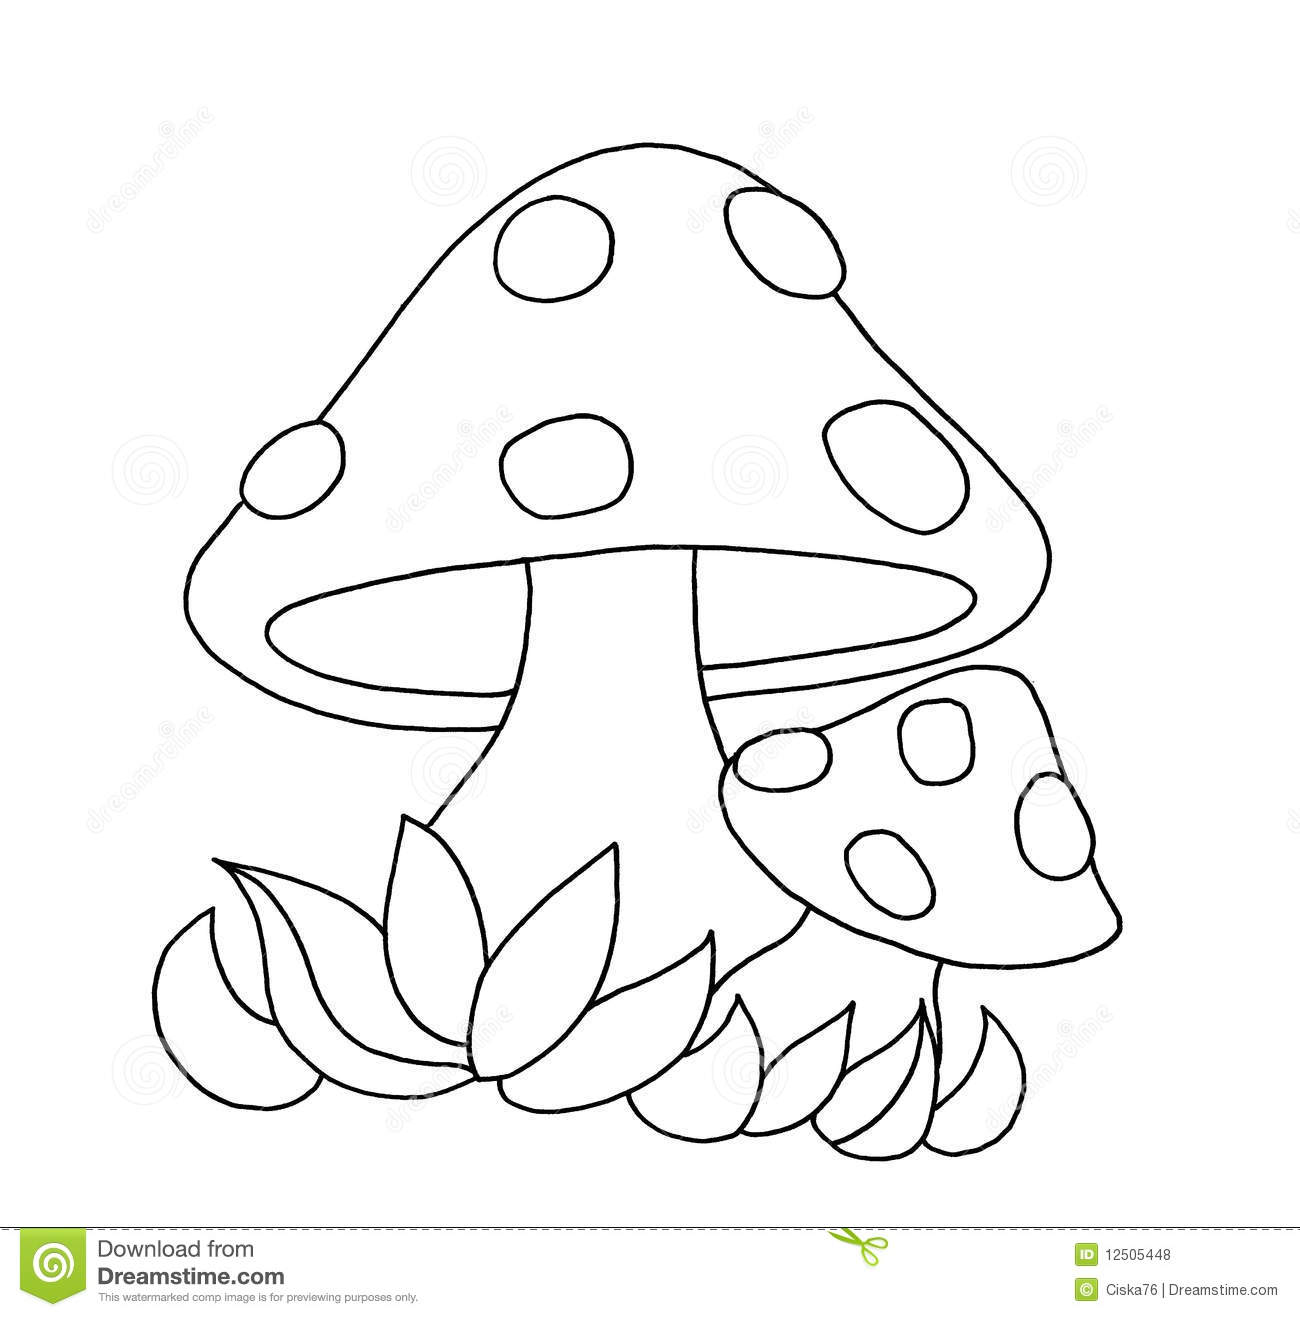 mushroom clipart black and white